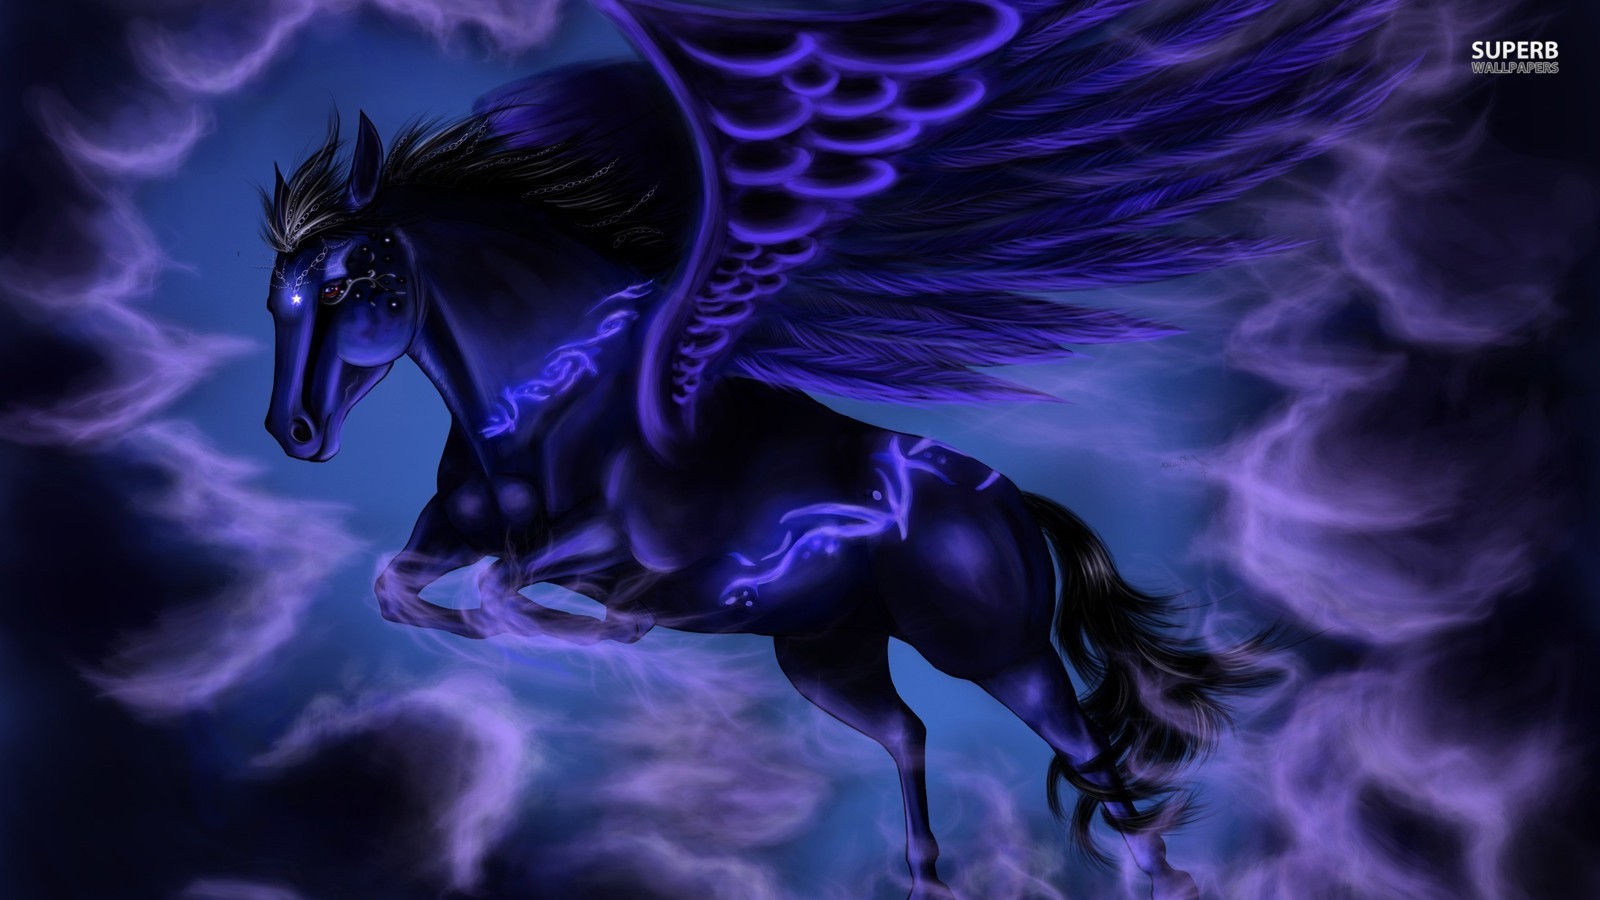 Pegasus Image Black HD Wallpaper And Background Photos